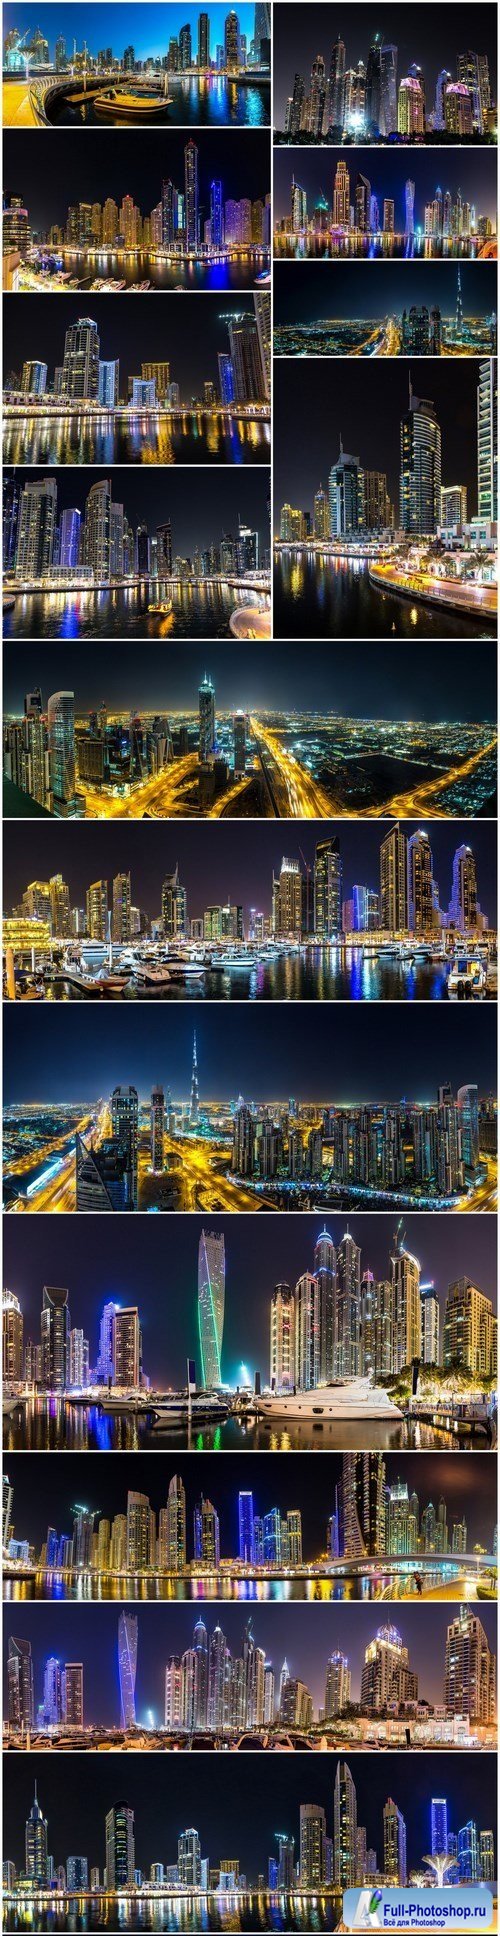 Dubai Travel 5 - 16xUHQ JPEG